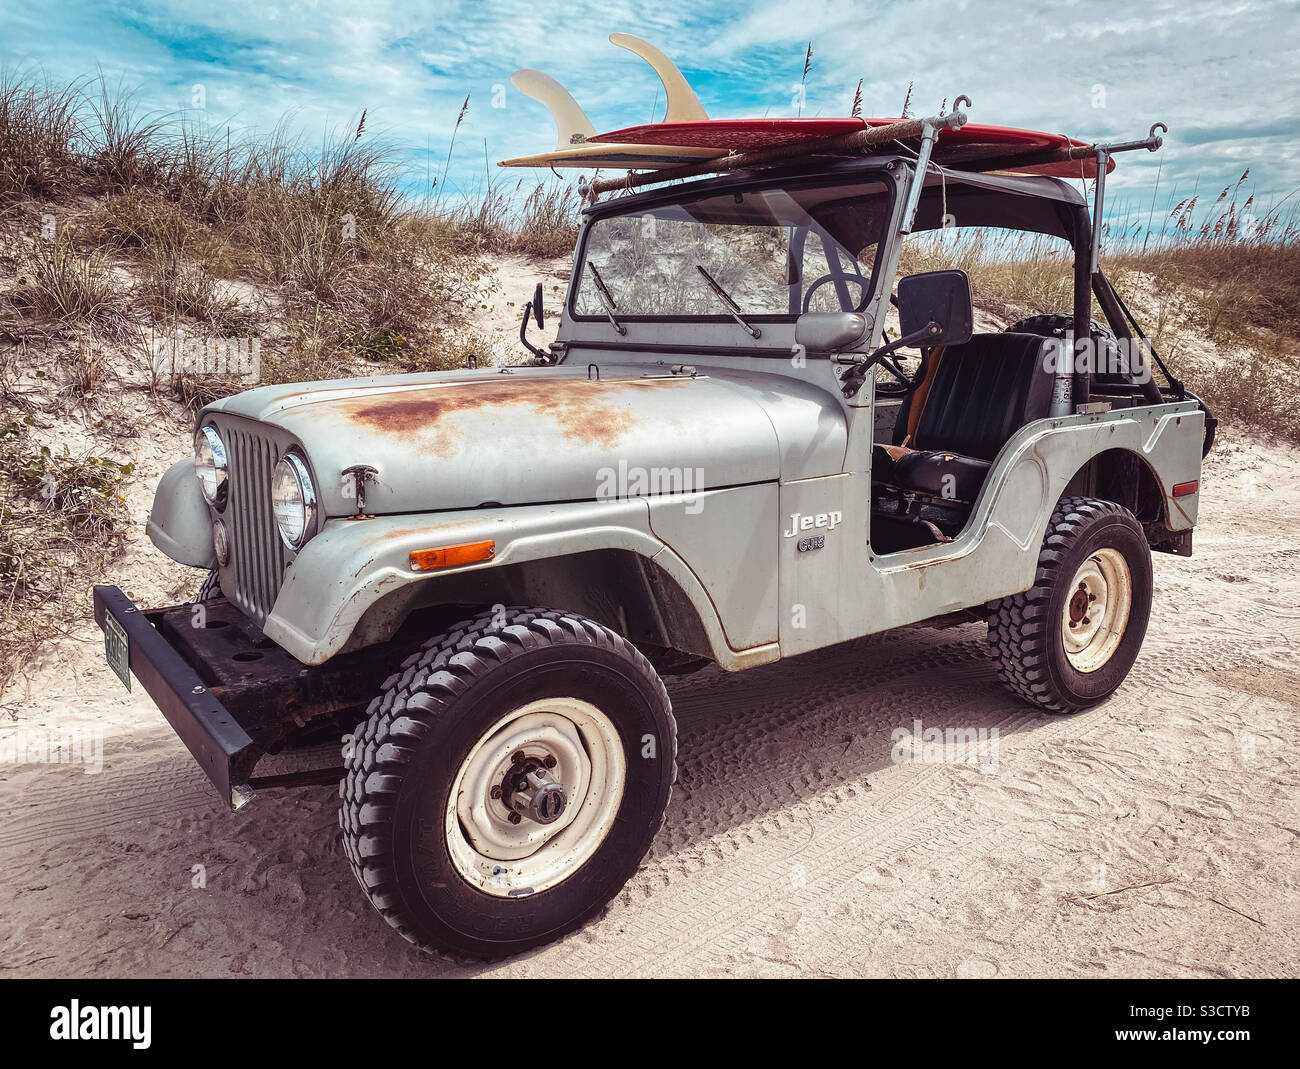 Actualizar 36+ imagen beach vintage jeep wrangler